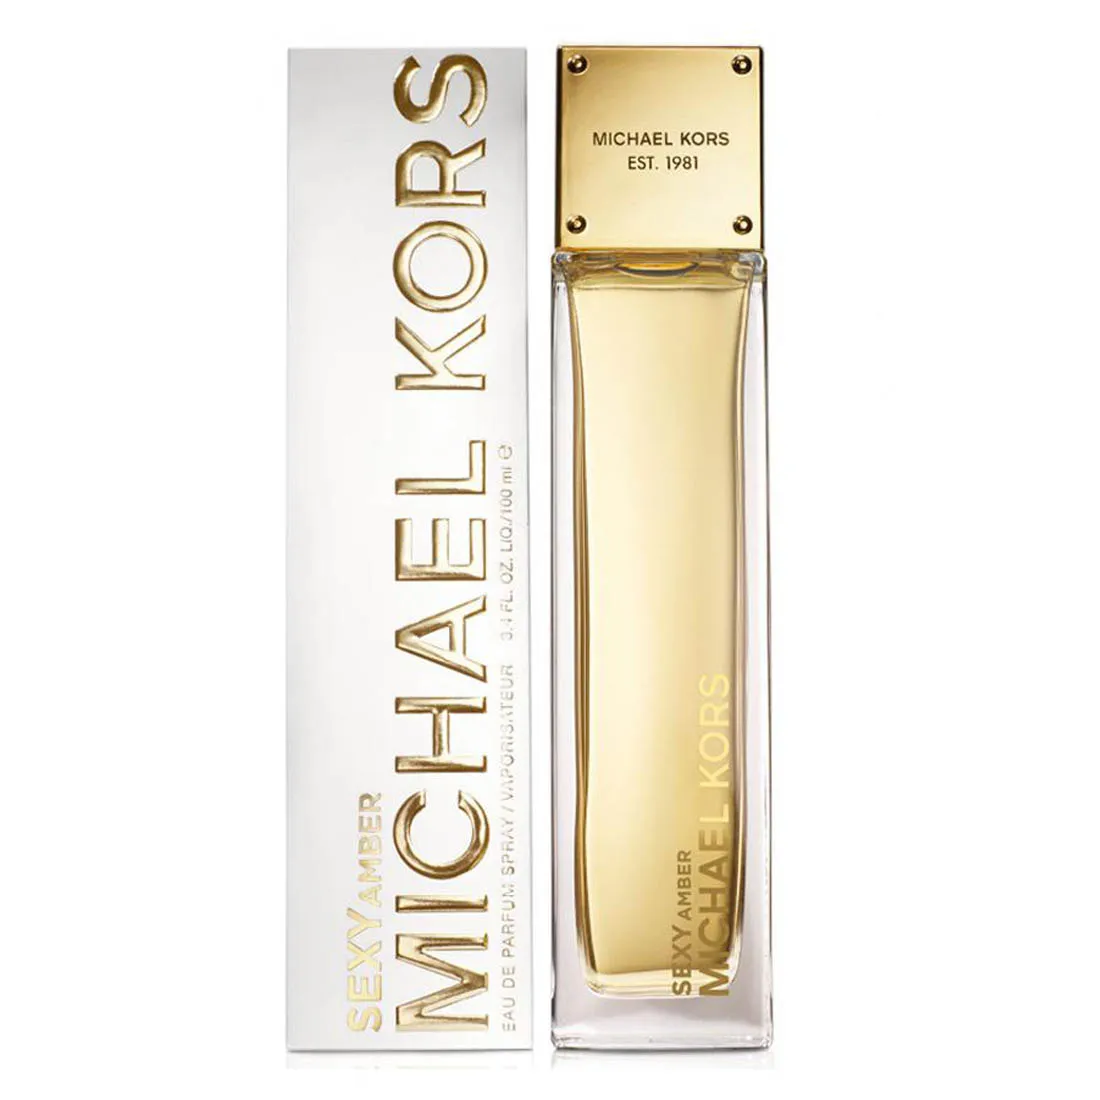 MICHAEL KORS Perfumes  Colognes  Perfume House BD